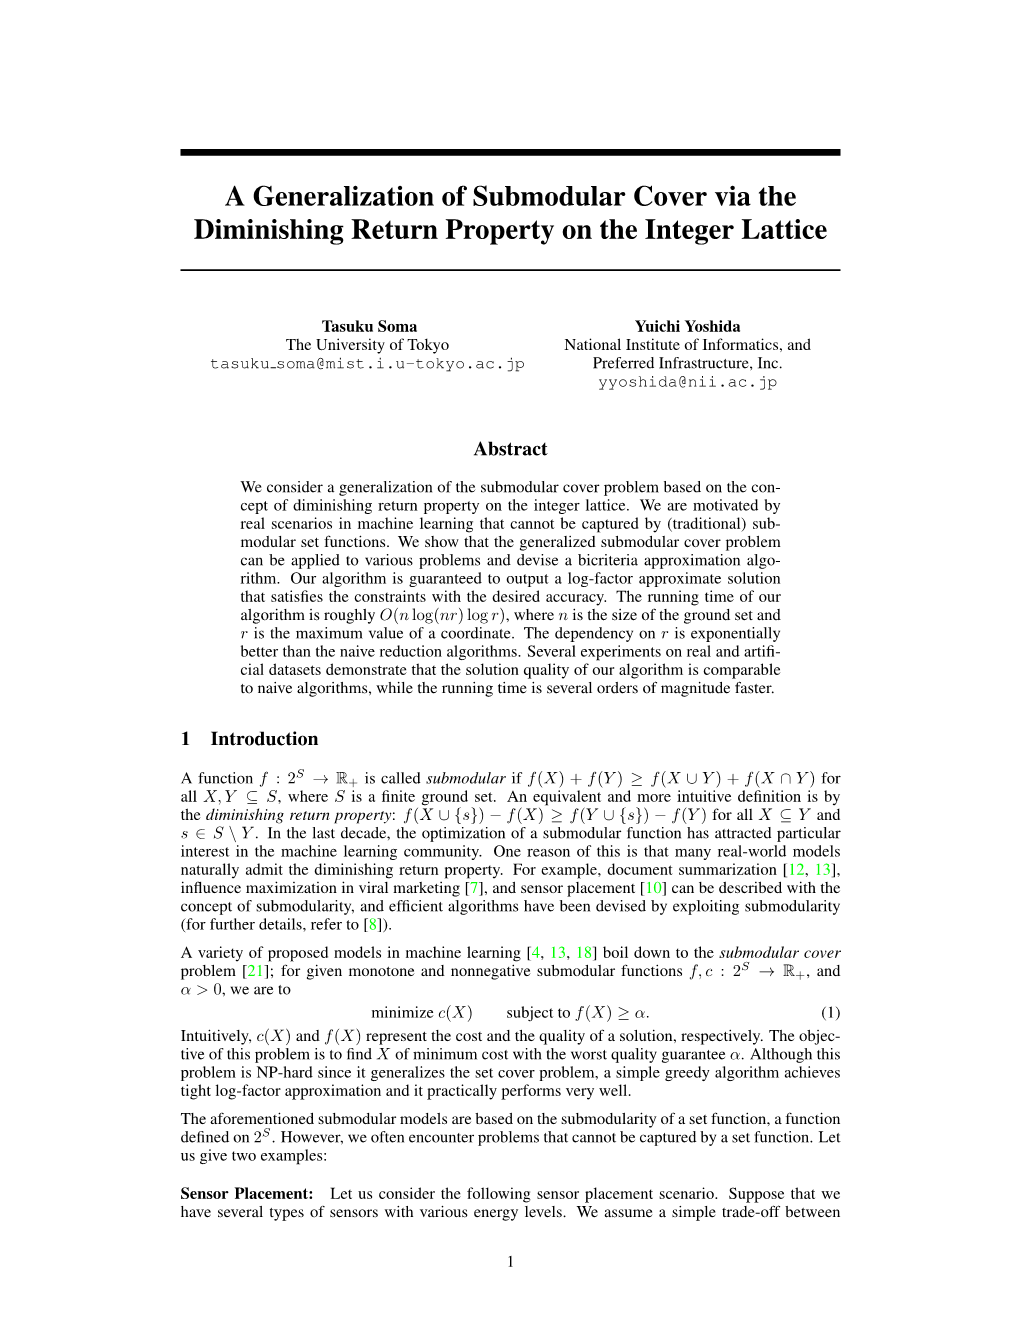 A Generalization of Submodular Cover Via the Diminishing Return Property on the Integer Lattice